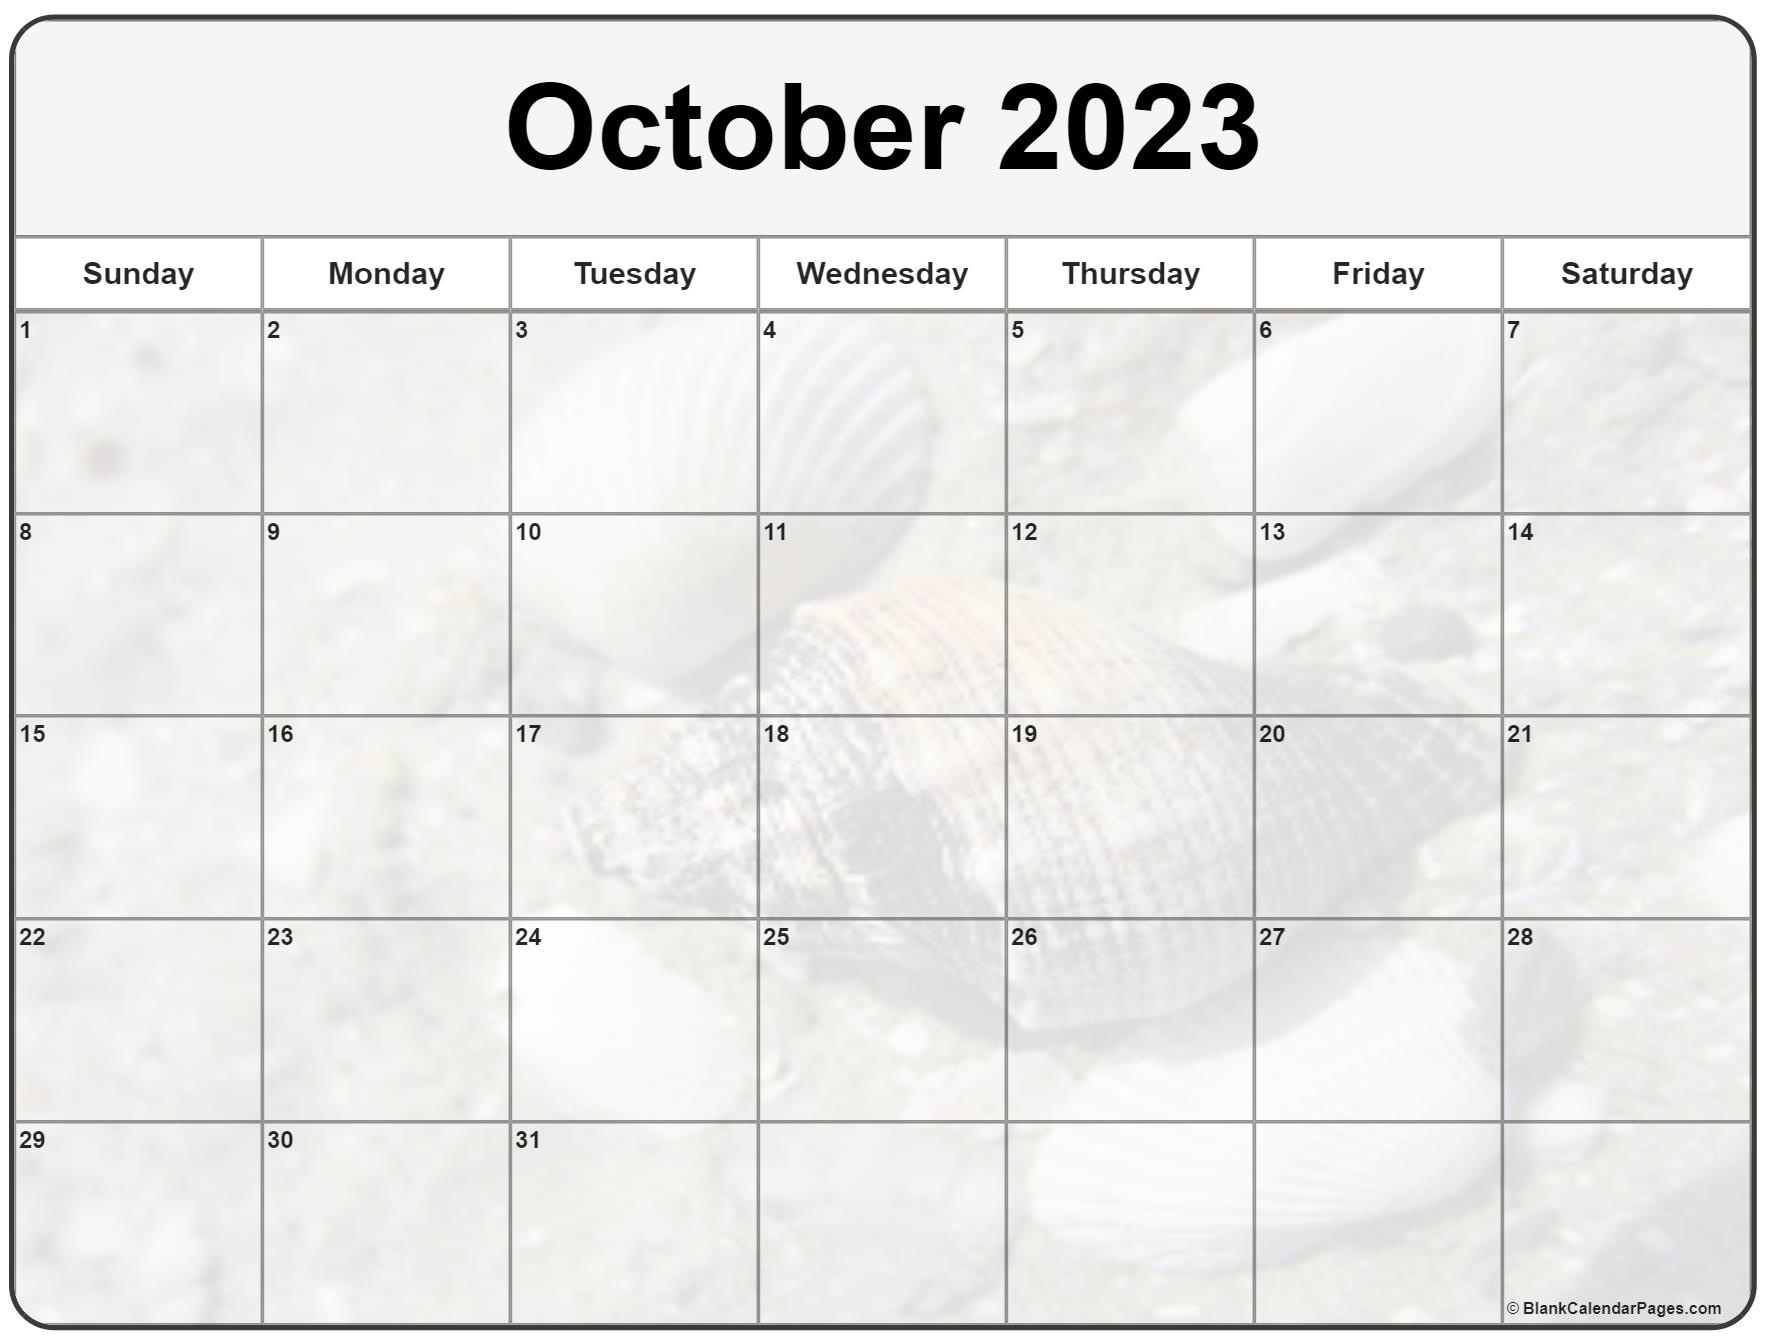 October Calendar Cute Free Printable October 2023 Calendar Designs Vrogue